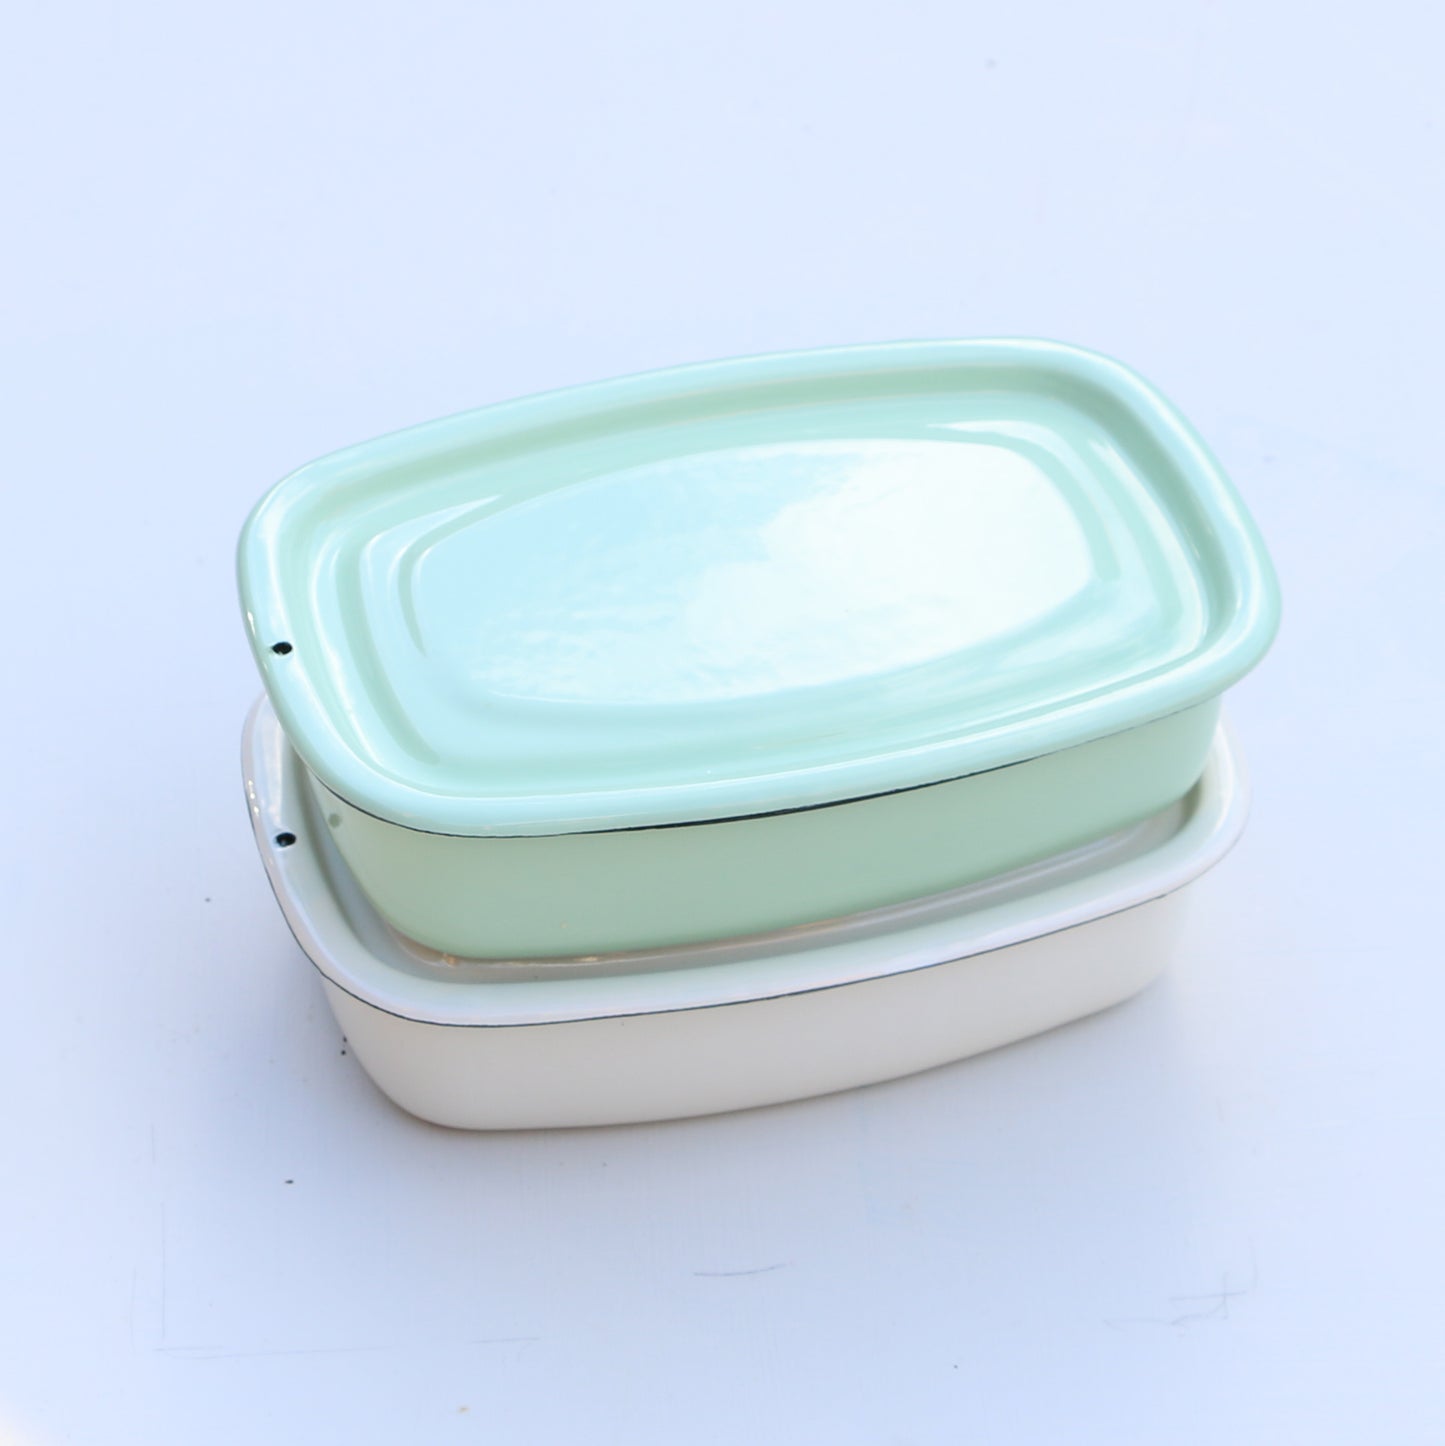 Enamel dish and lid: Large Cream